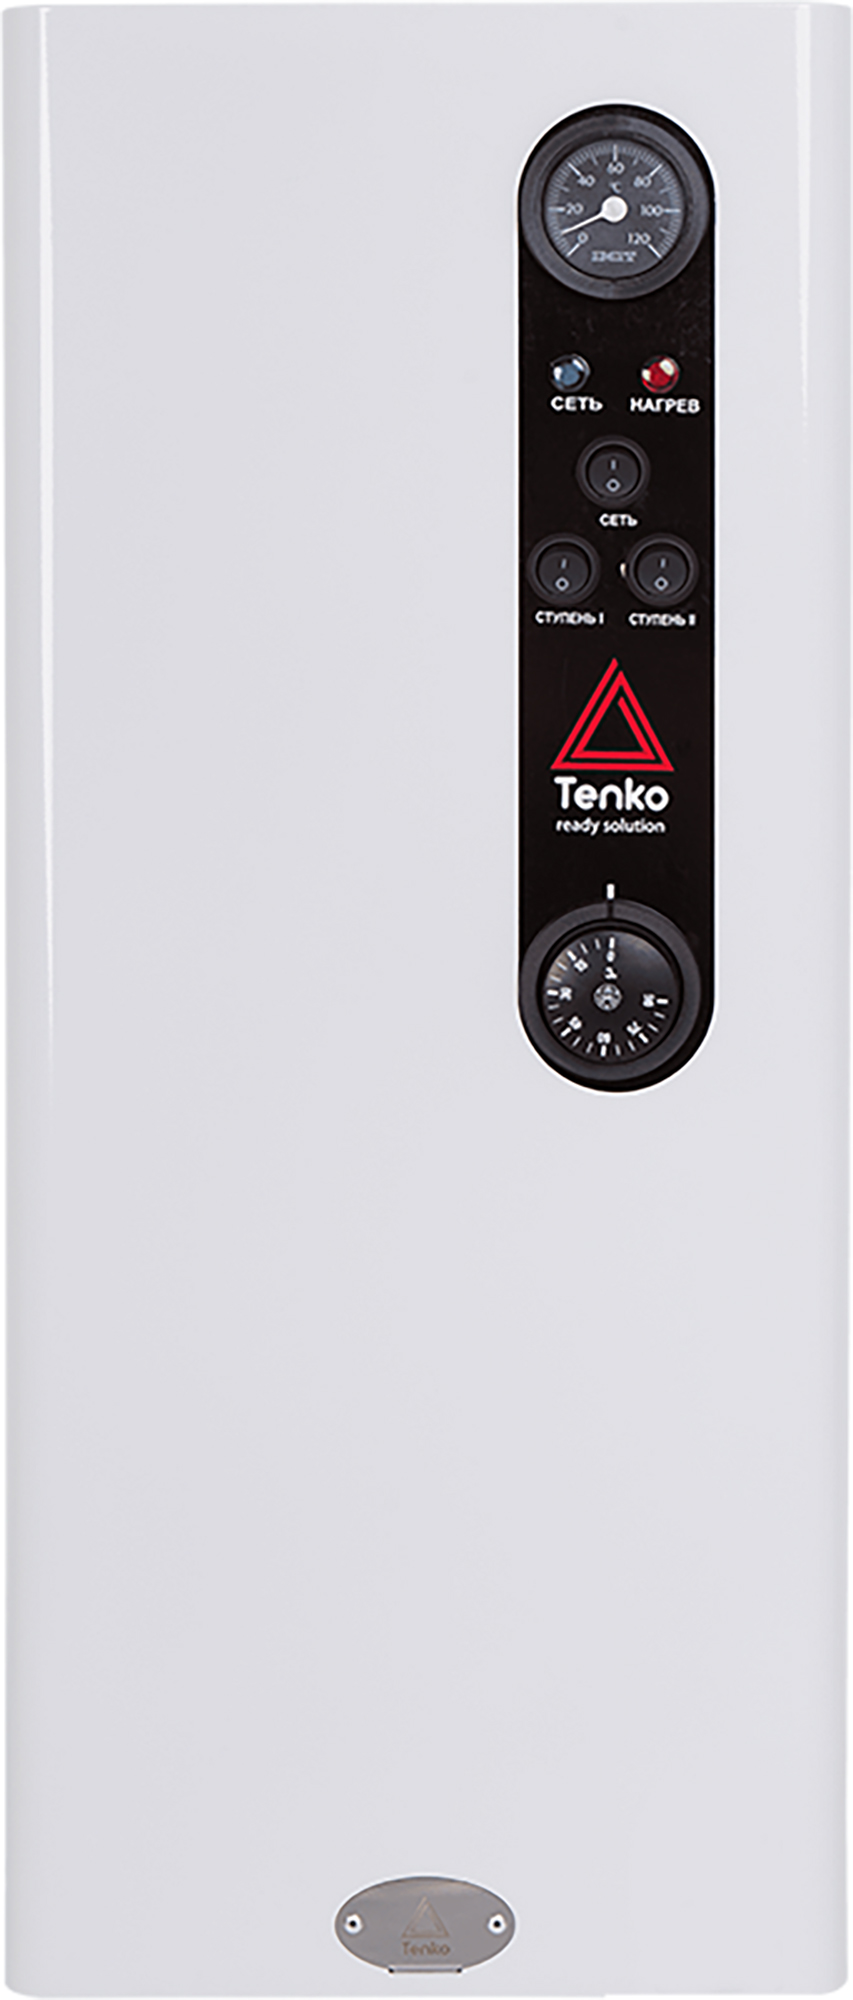 Электрокотел с циркуляционным насосом Tenko Стандарт 3 220 (d)